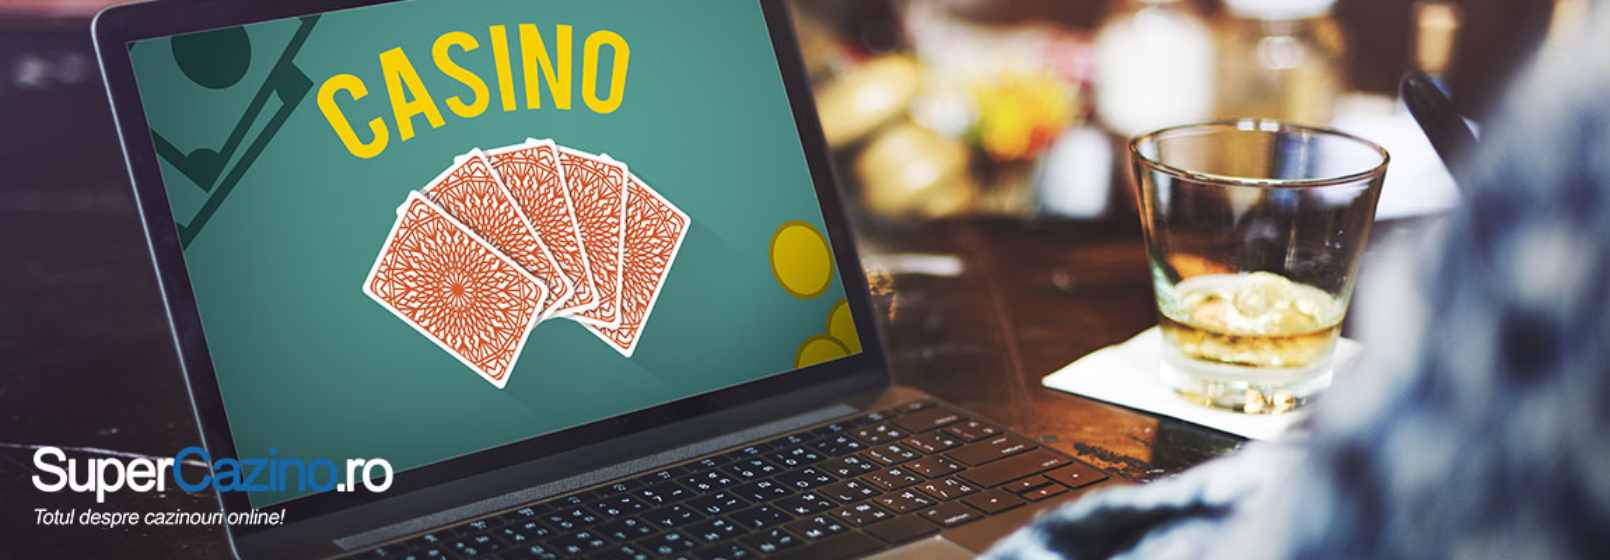 rezolutii casino online